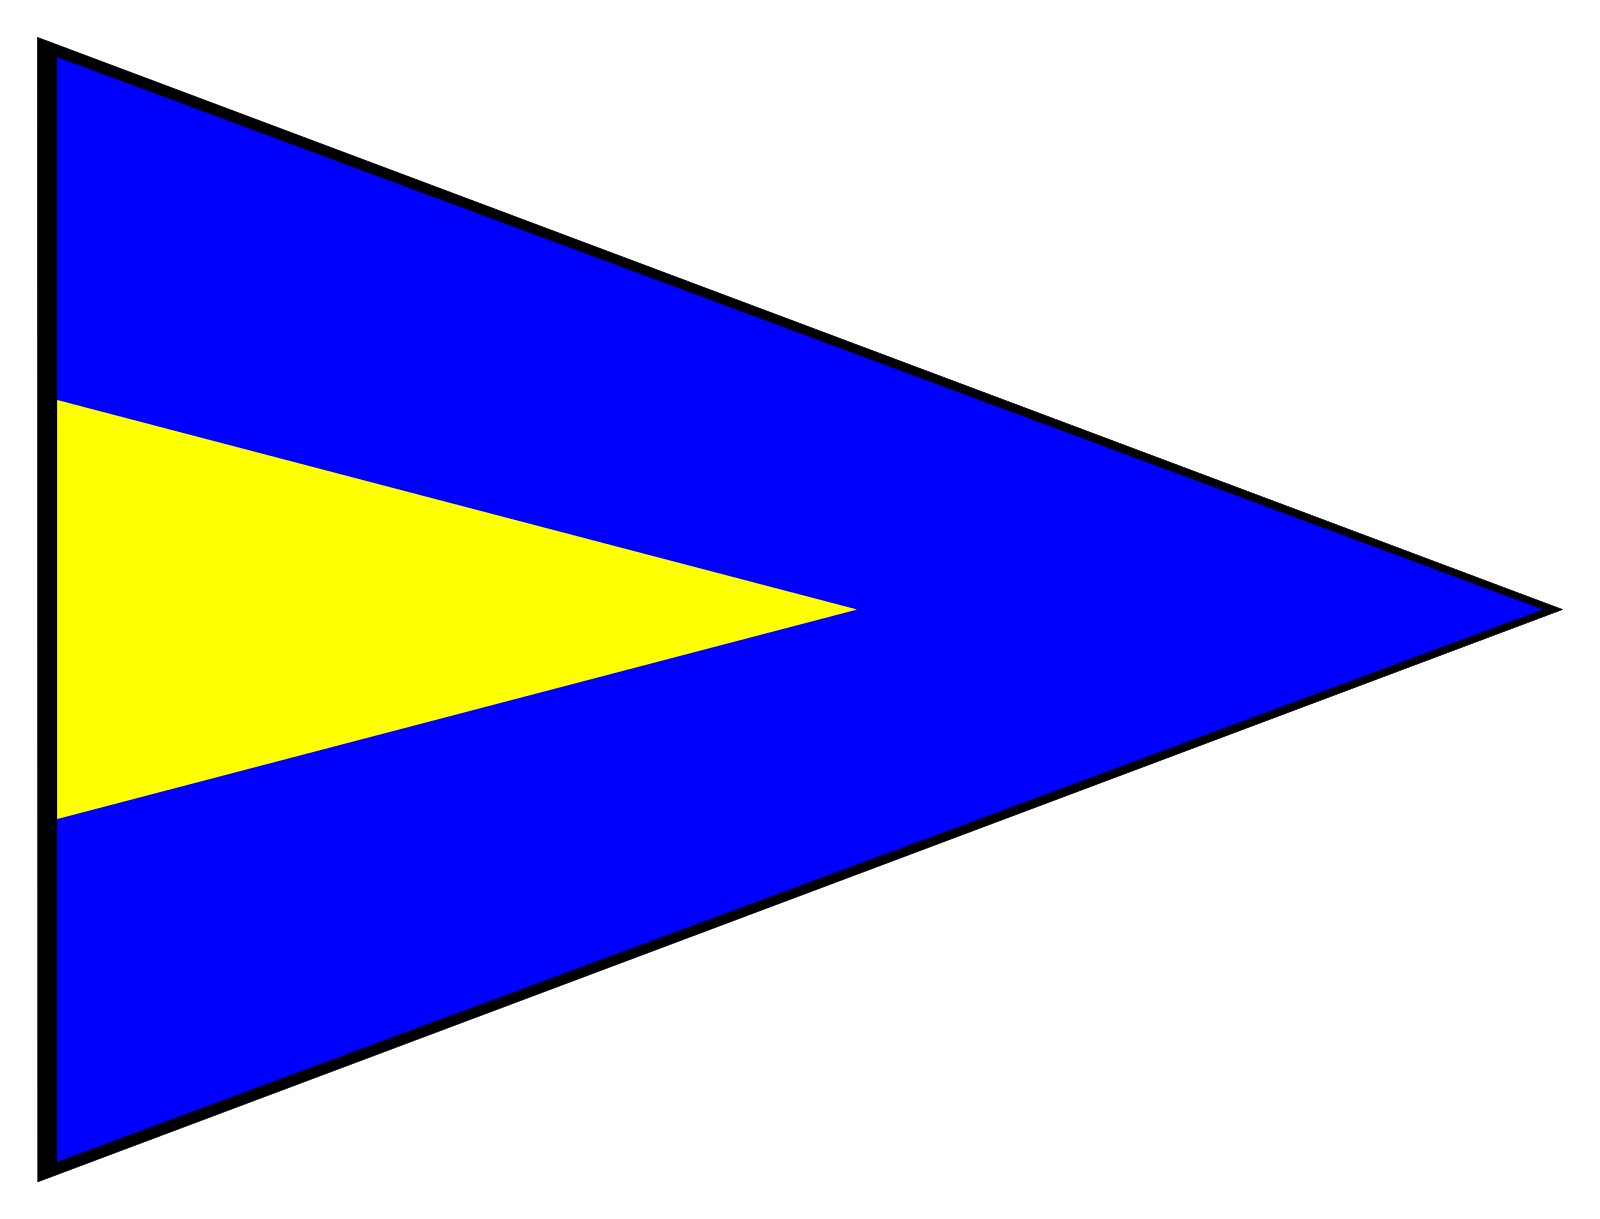 Свод флагов. Флаги международного свода сигналов вектор. Флаги МСС Юниформ. Голубой флаг с желтым треугольником. Международный свод сигналов.